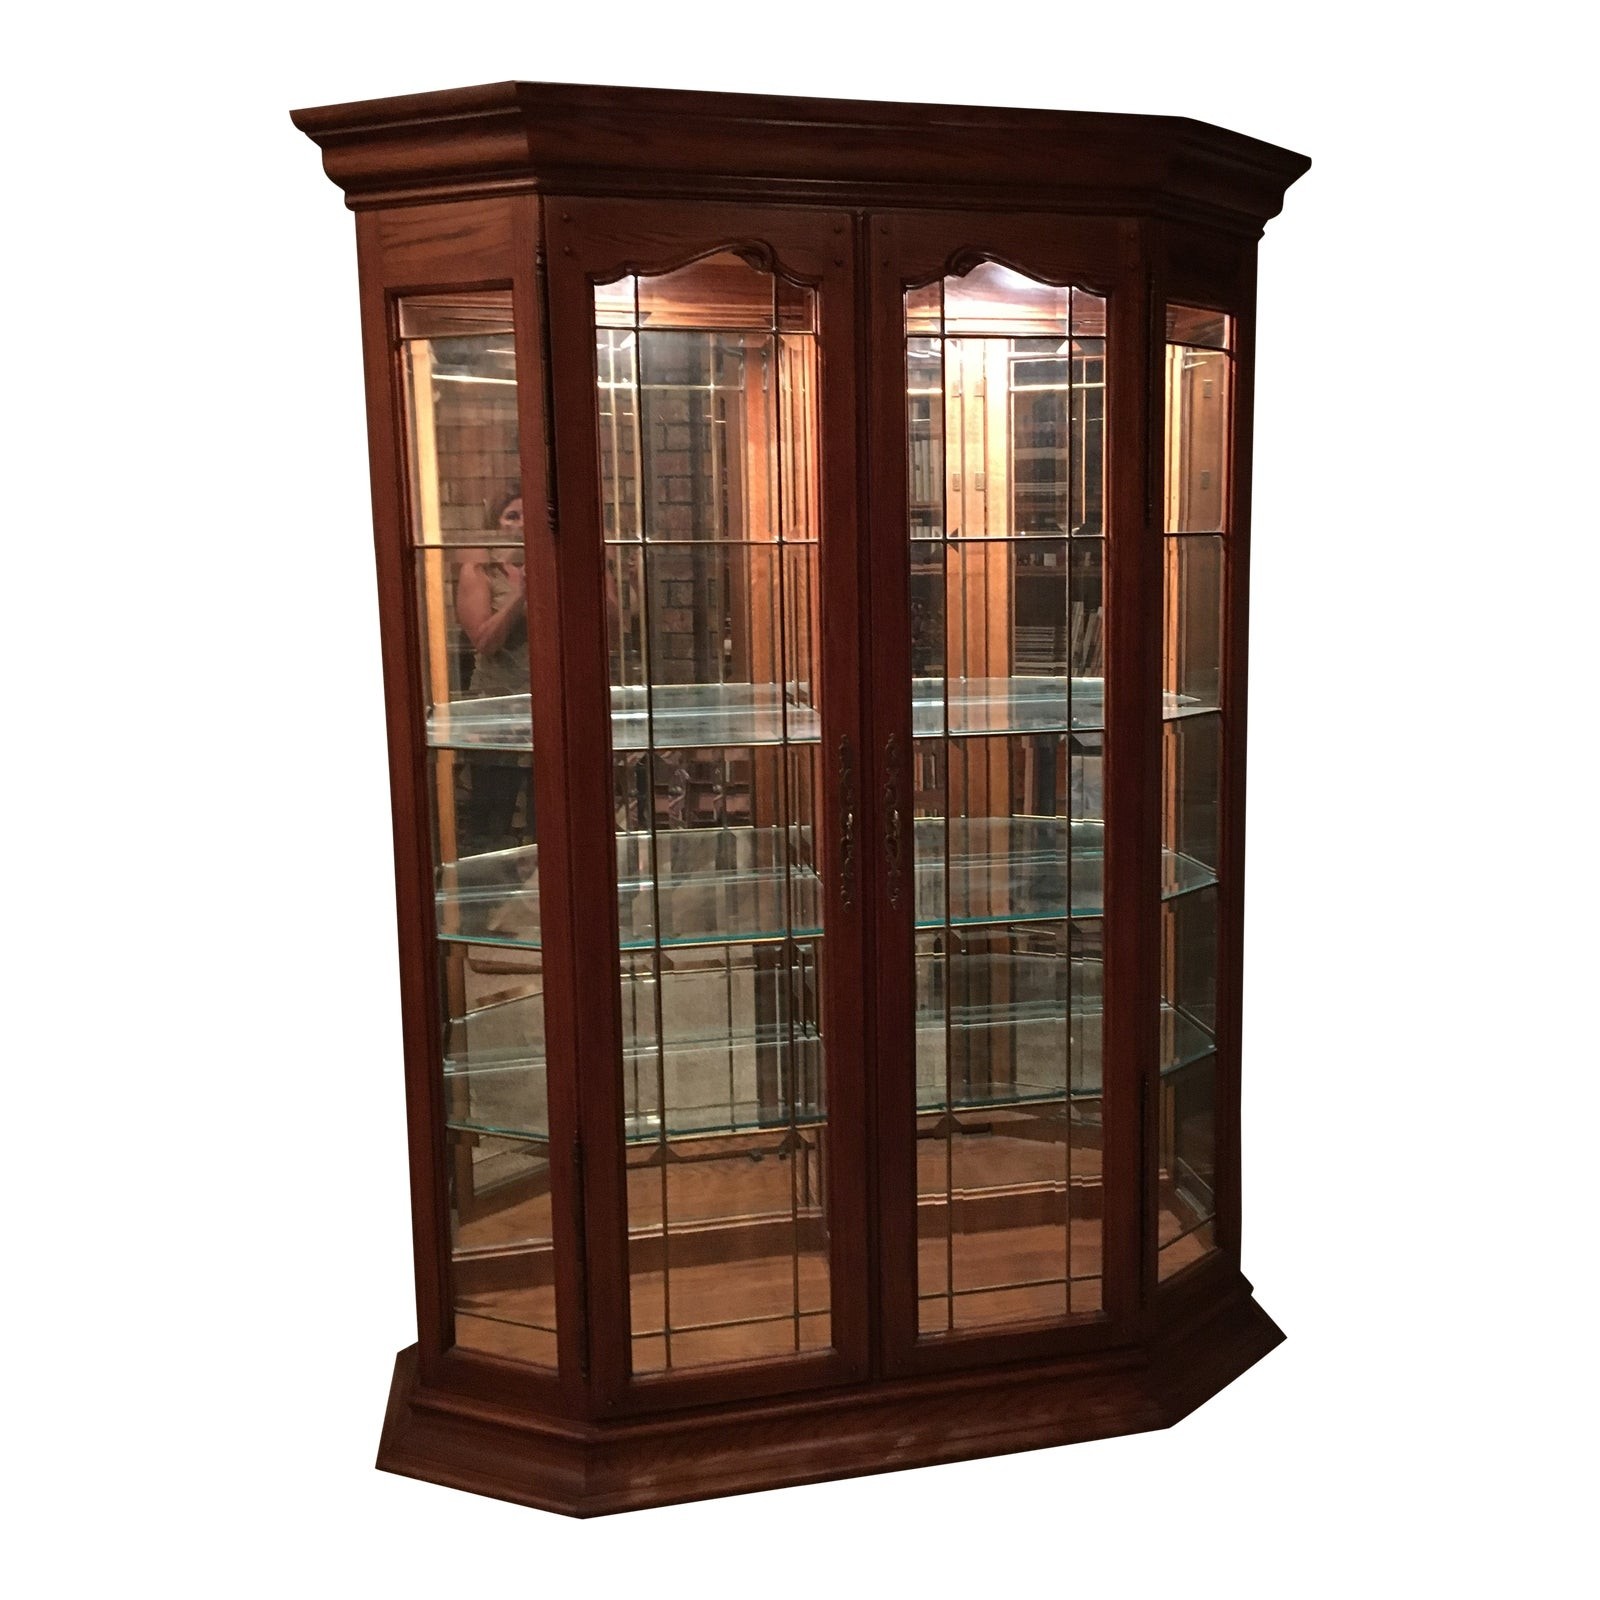 Thomasville solid wood curio cabinet chairish